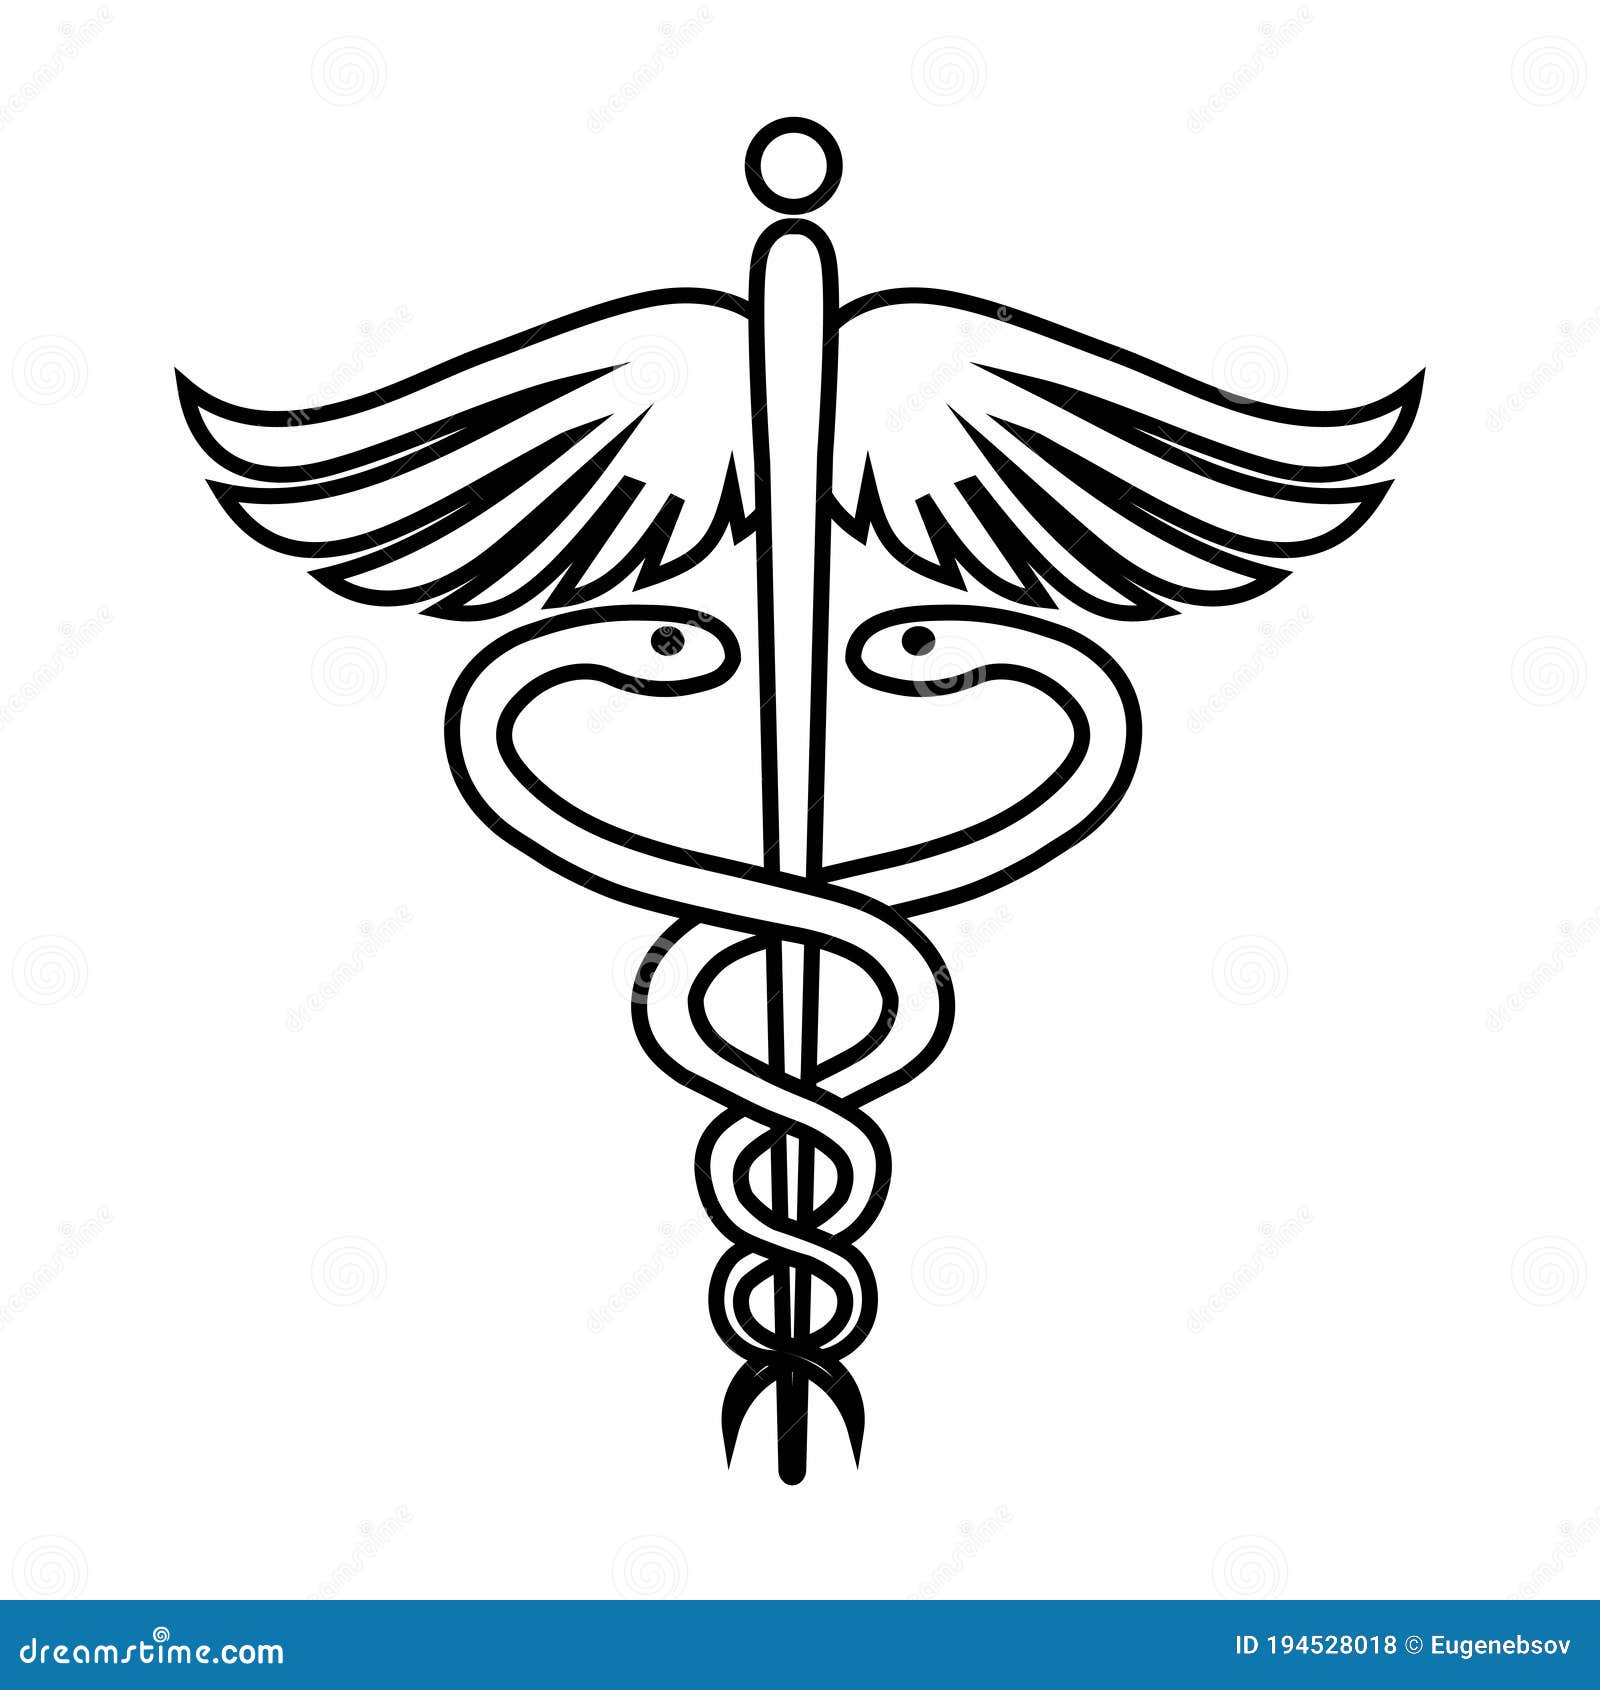 Ambulance Snake Symbol